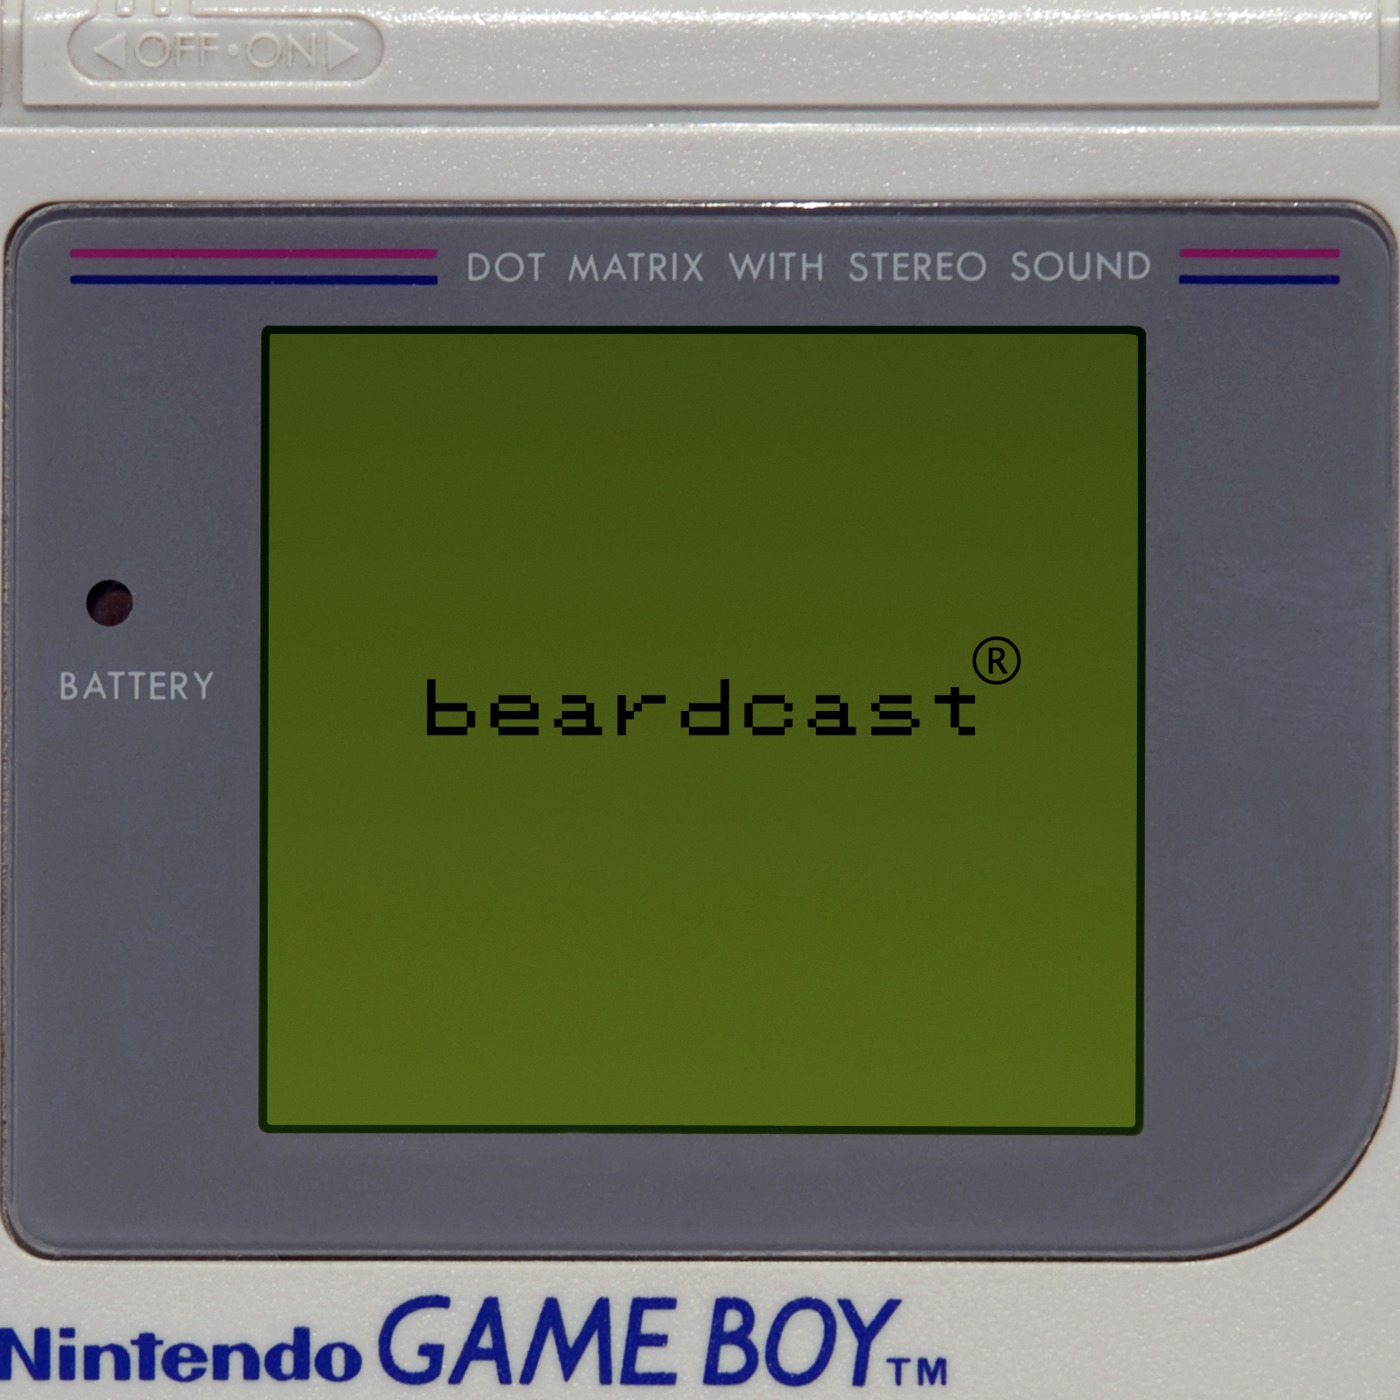 Beardcast